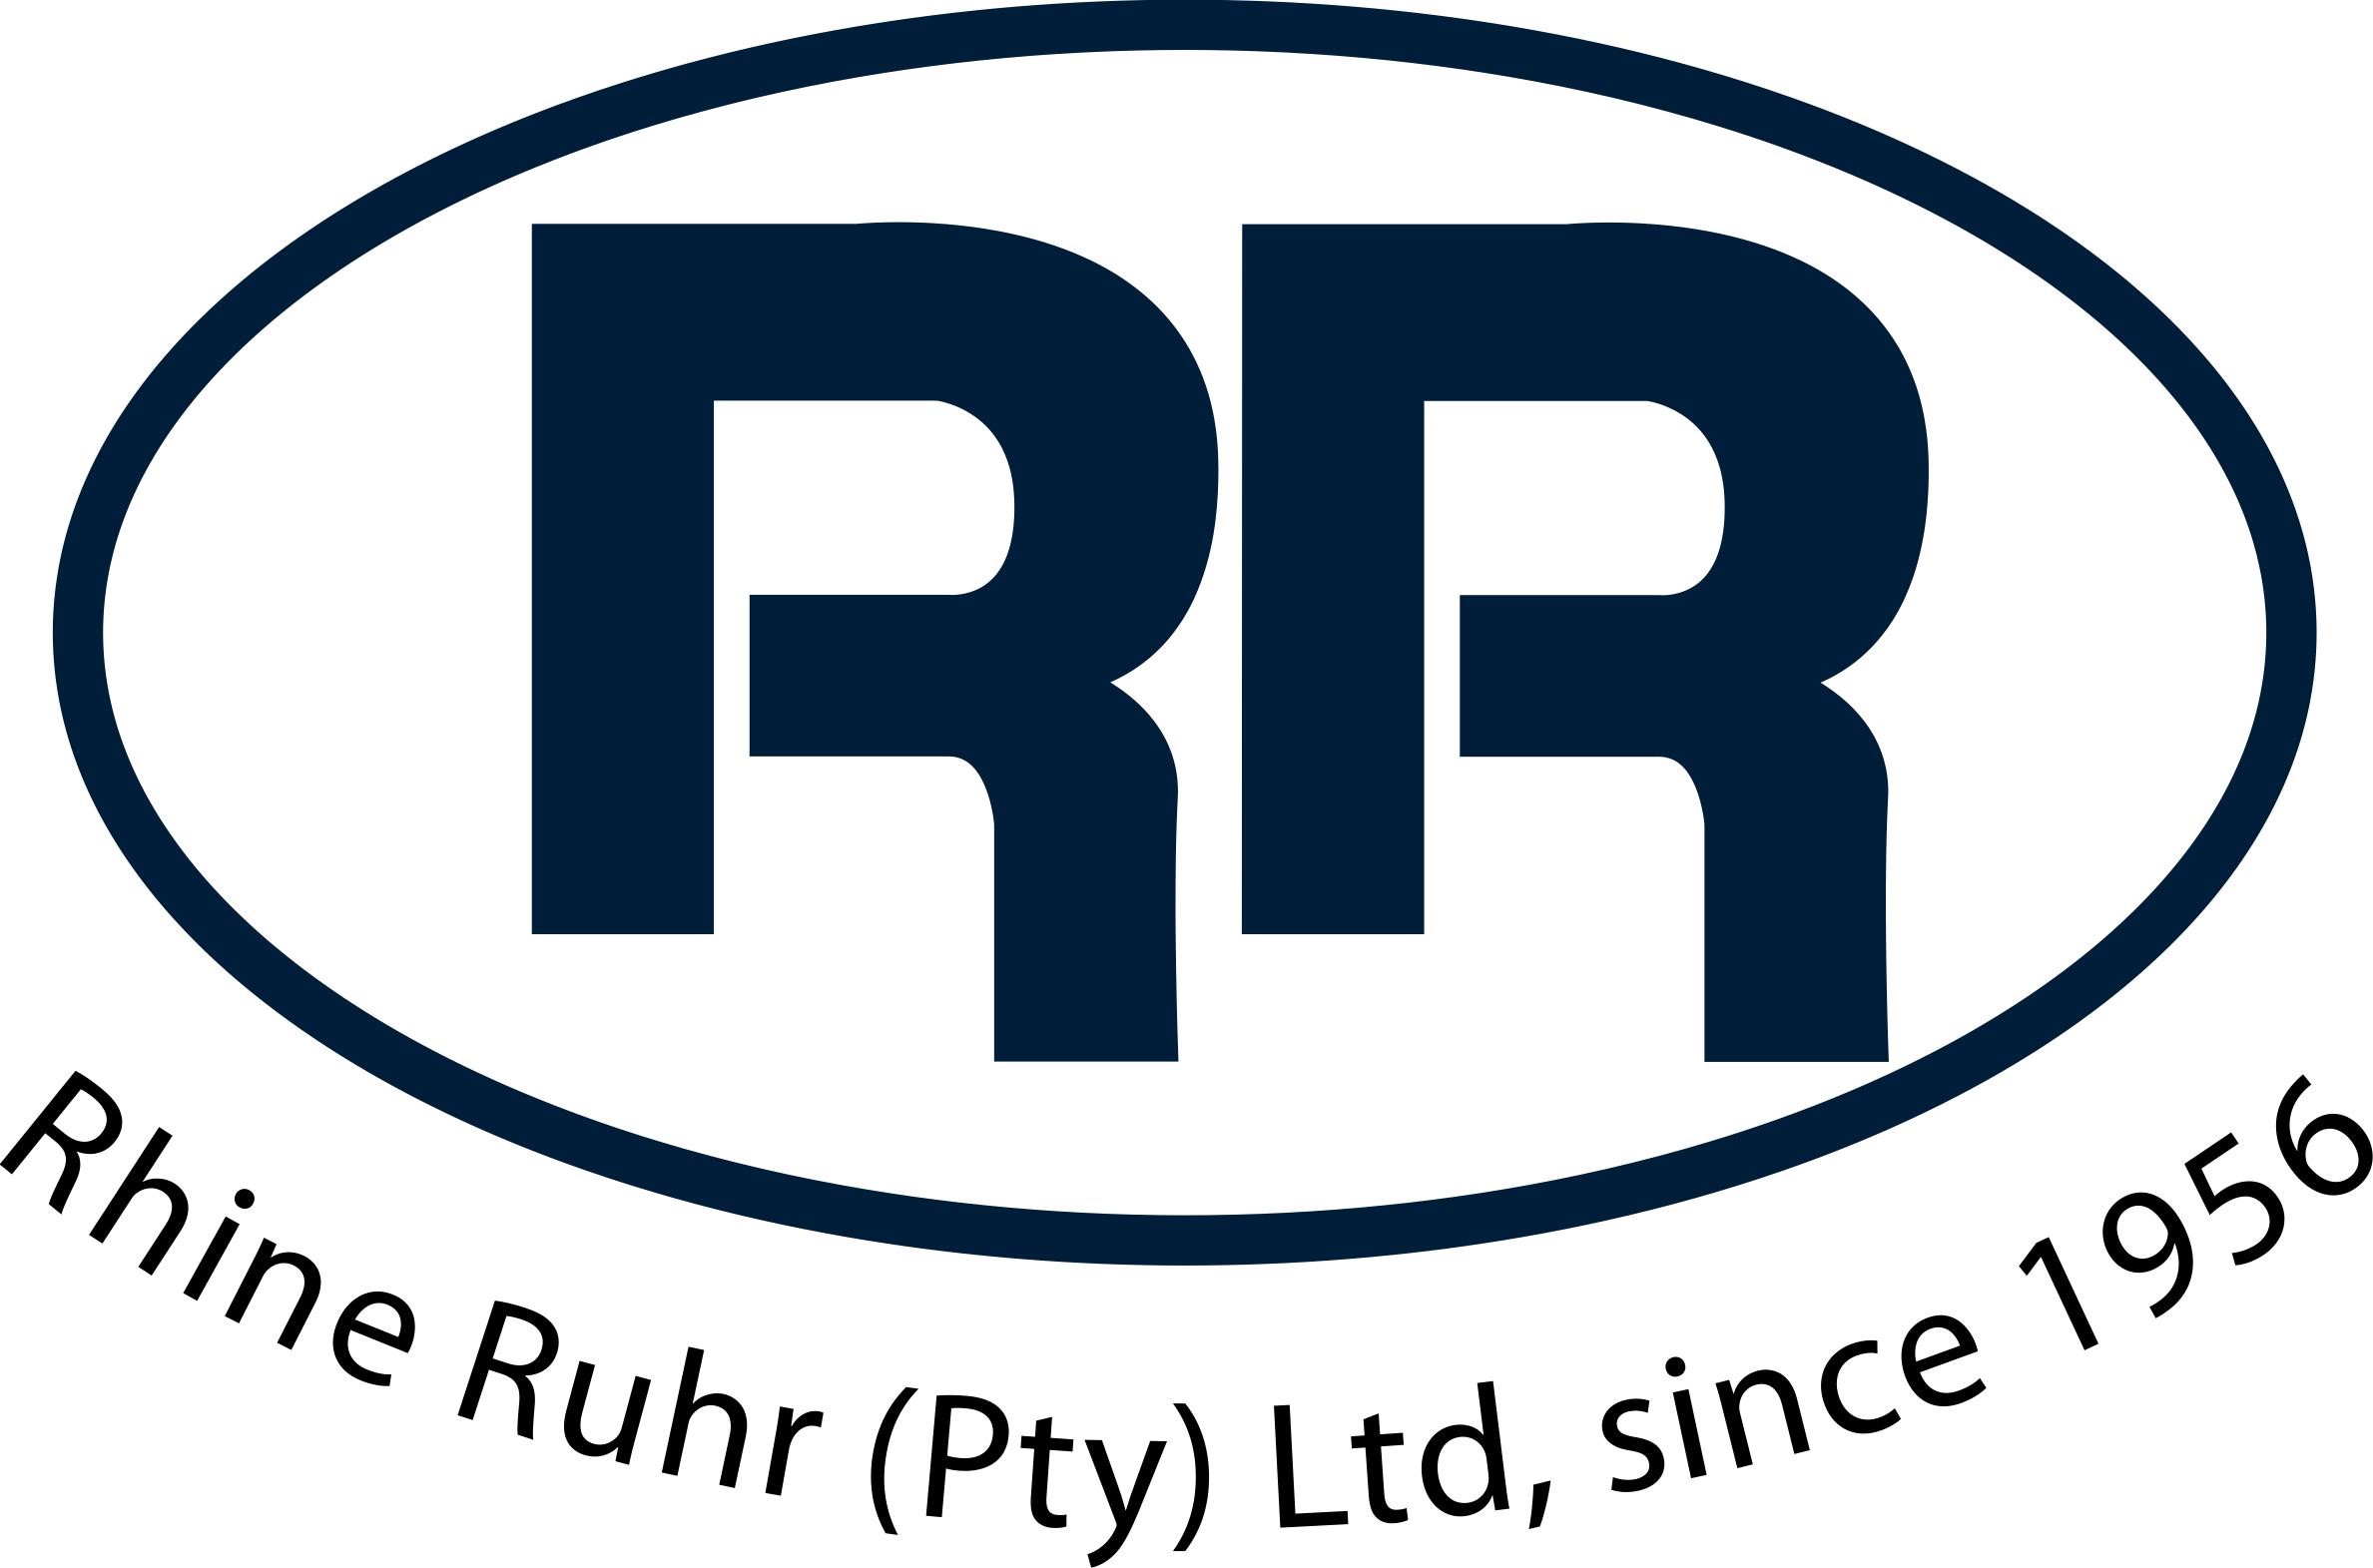 Rhine Ruhr (Pty) Ltd